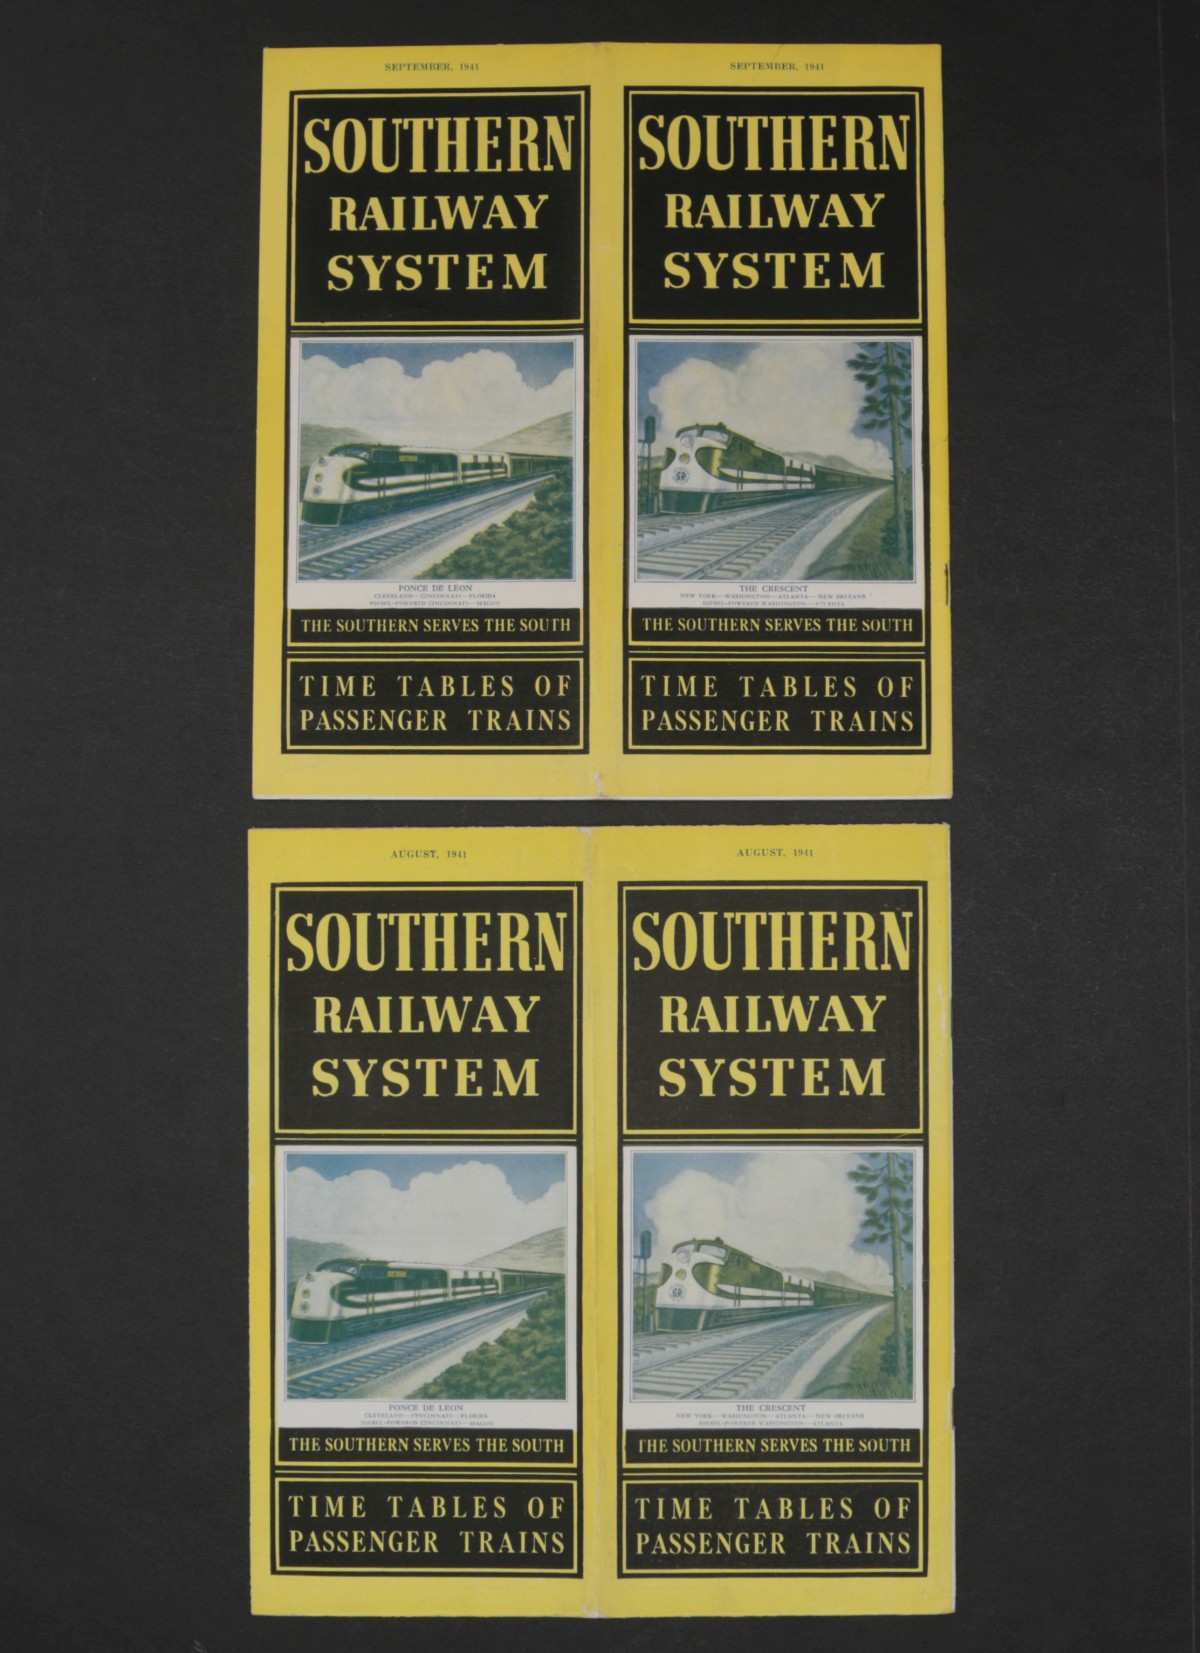 26 PIECES OF SOUTHERN RAILWAY SYSTEM RR EPHEMERA